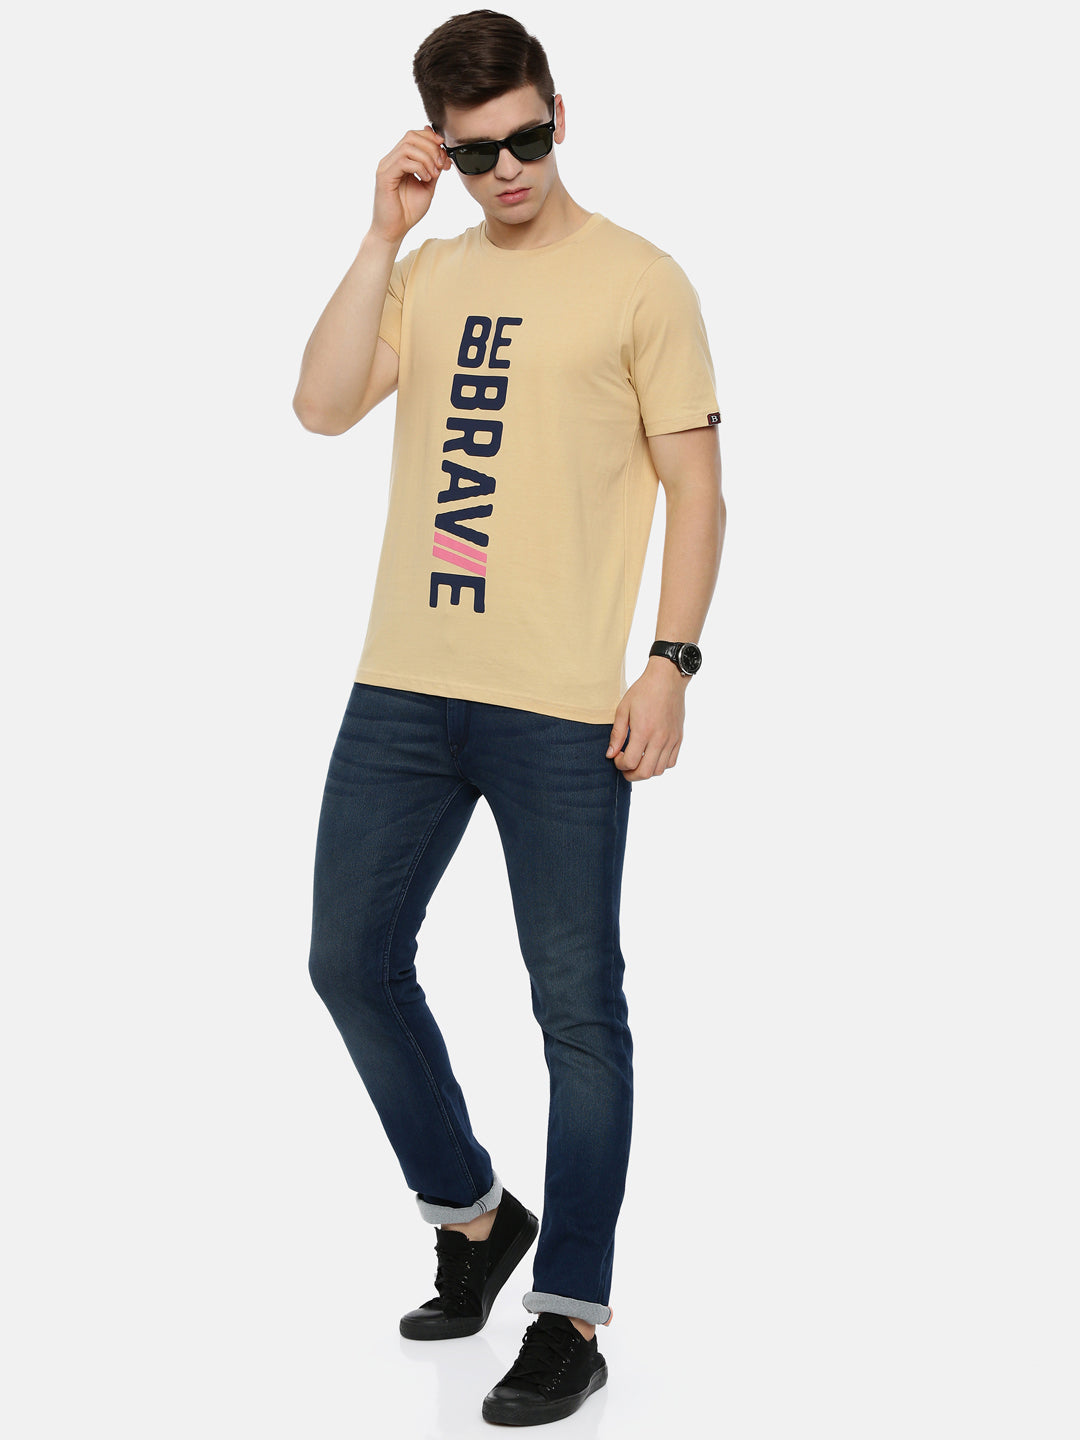 Be Brave T-Shirt Graphic T-Shirts Bushirt   